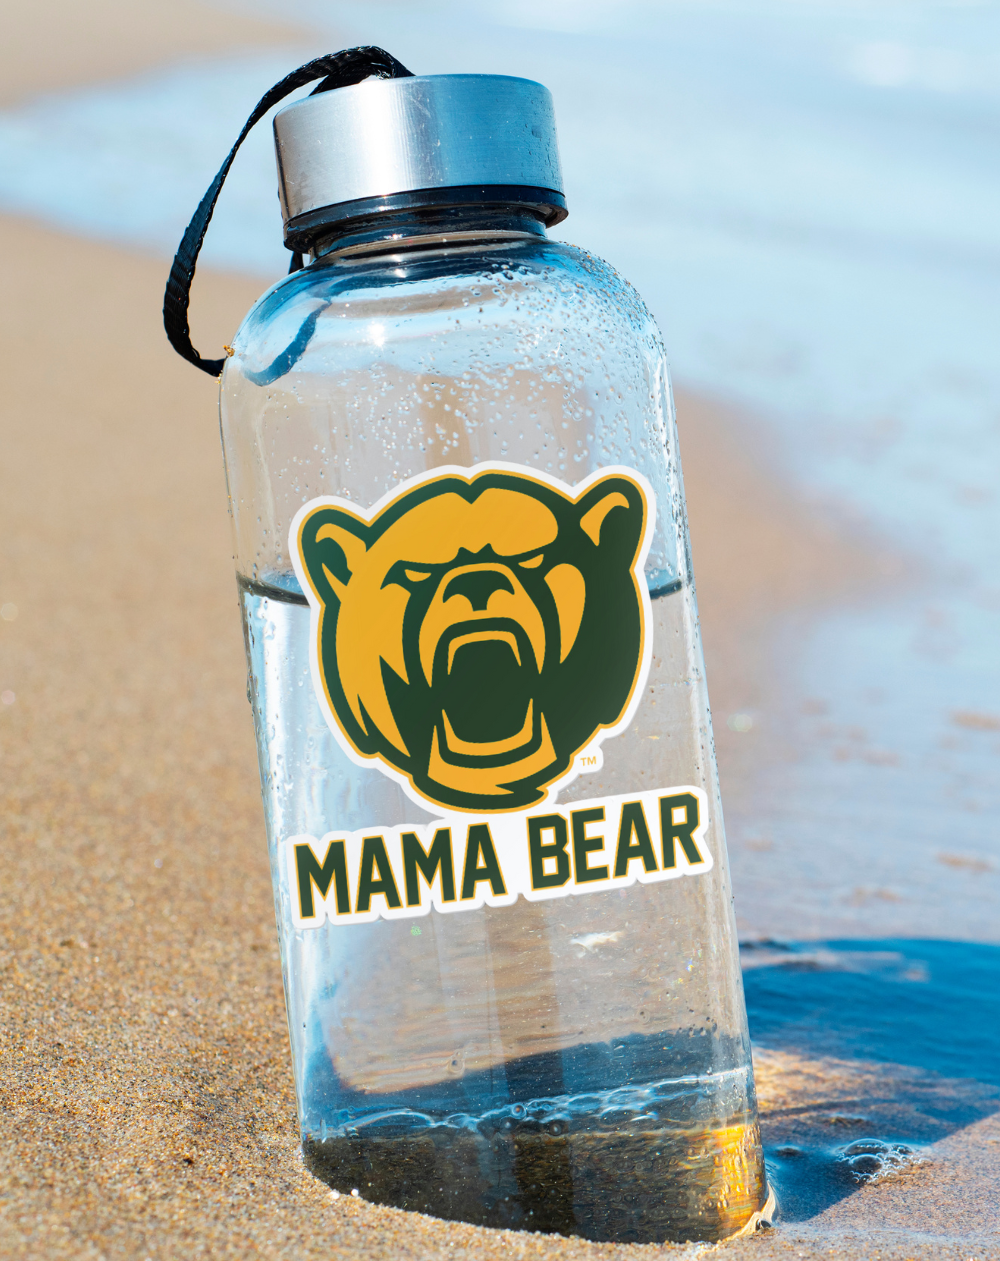 Baylor University Mama Bear - Original Design - Car Decal Bumper Sticker on Water Bottle at the Beach